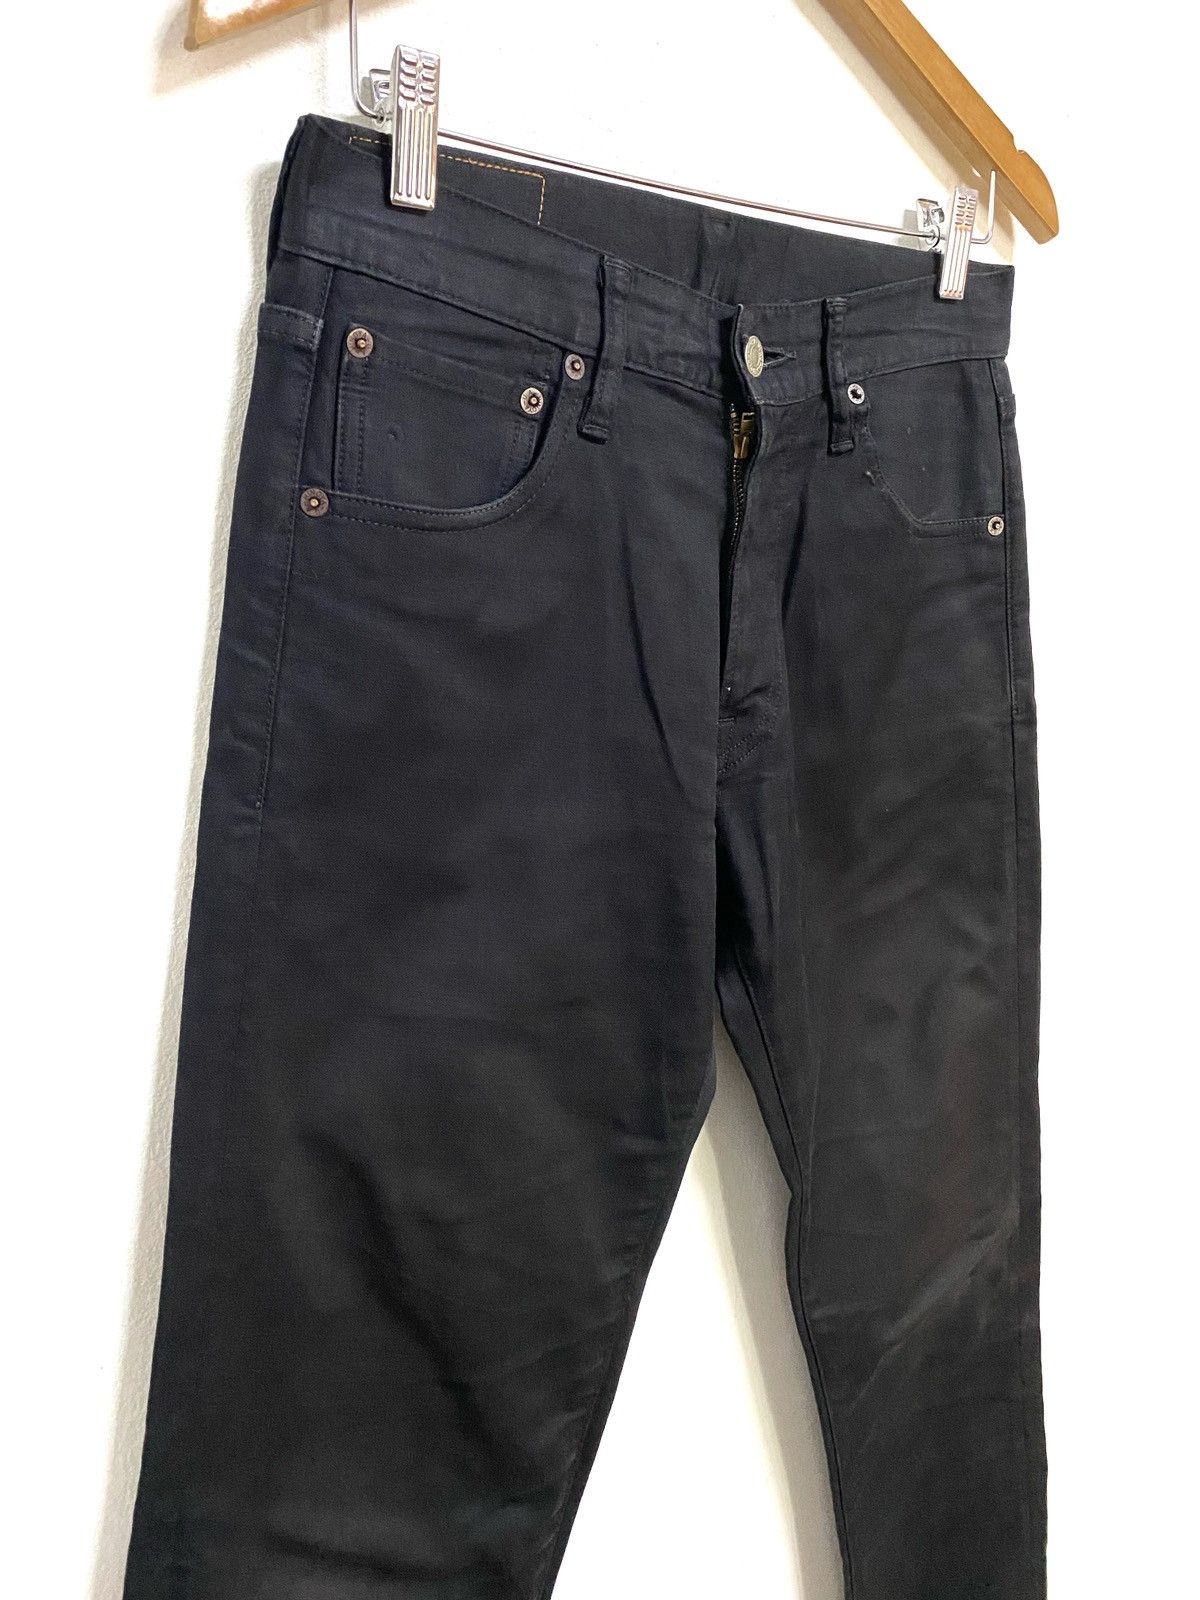 Burgus Plus Hinoya Original Black Skinny Jeans - 5